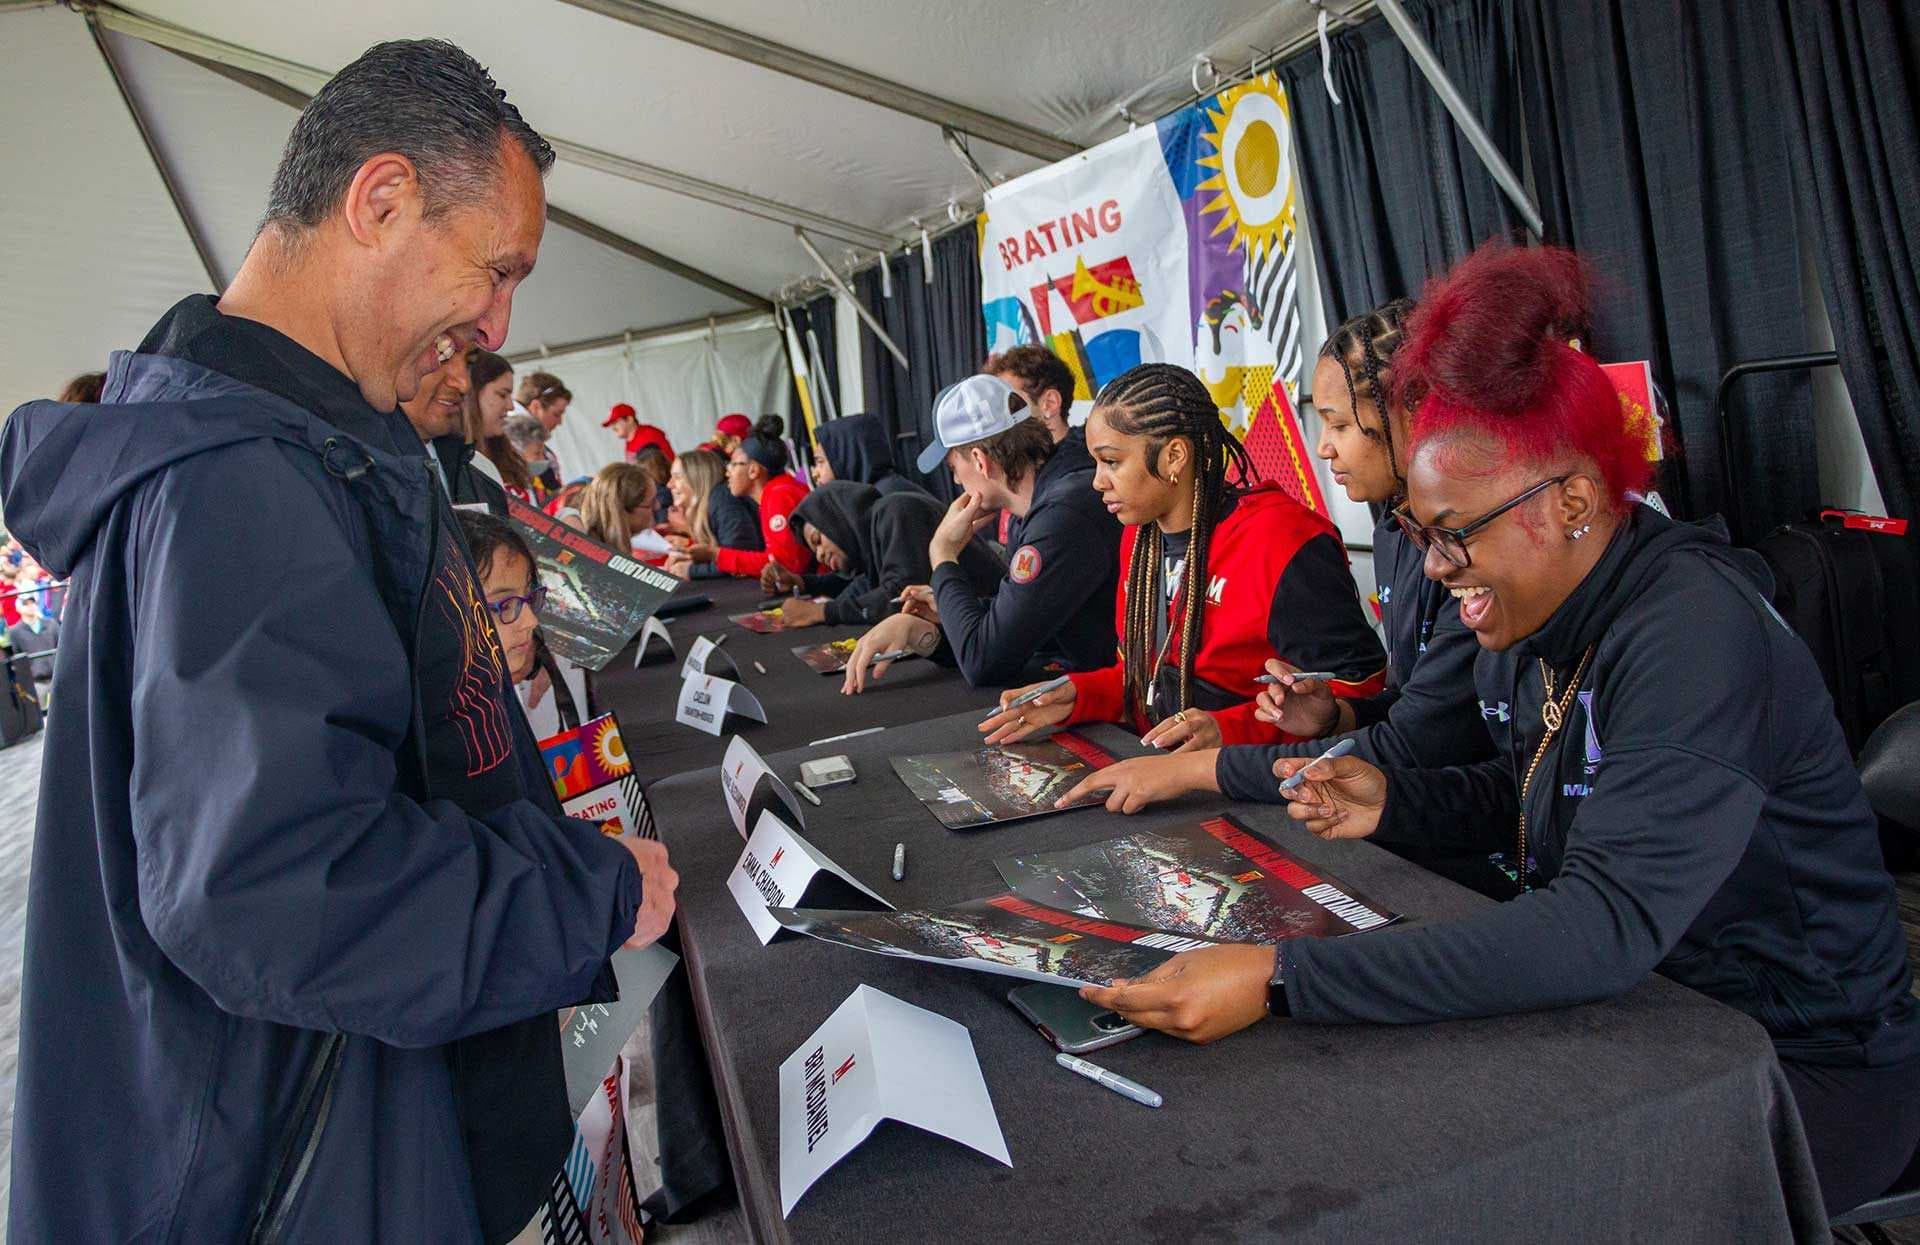 athletes sign autographs for fans